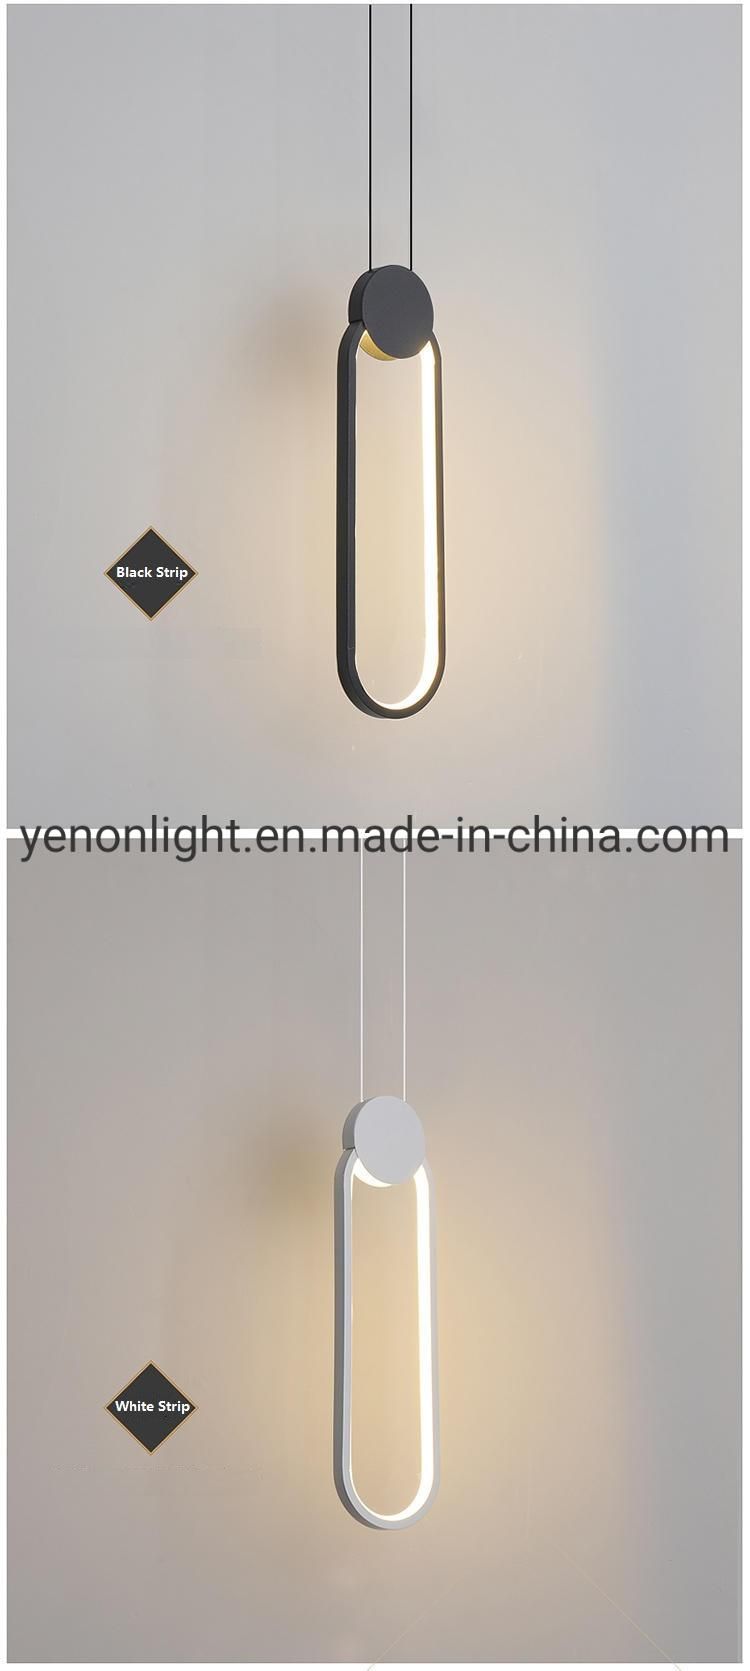 Home Decoration Iron Pendent Lamp Drop Lighting Suspension Light